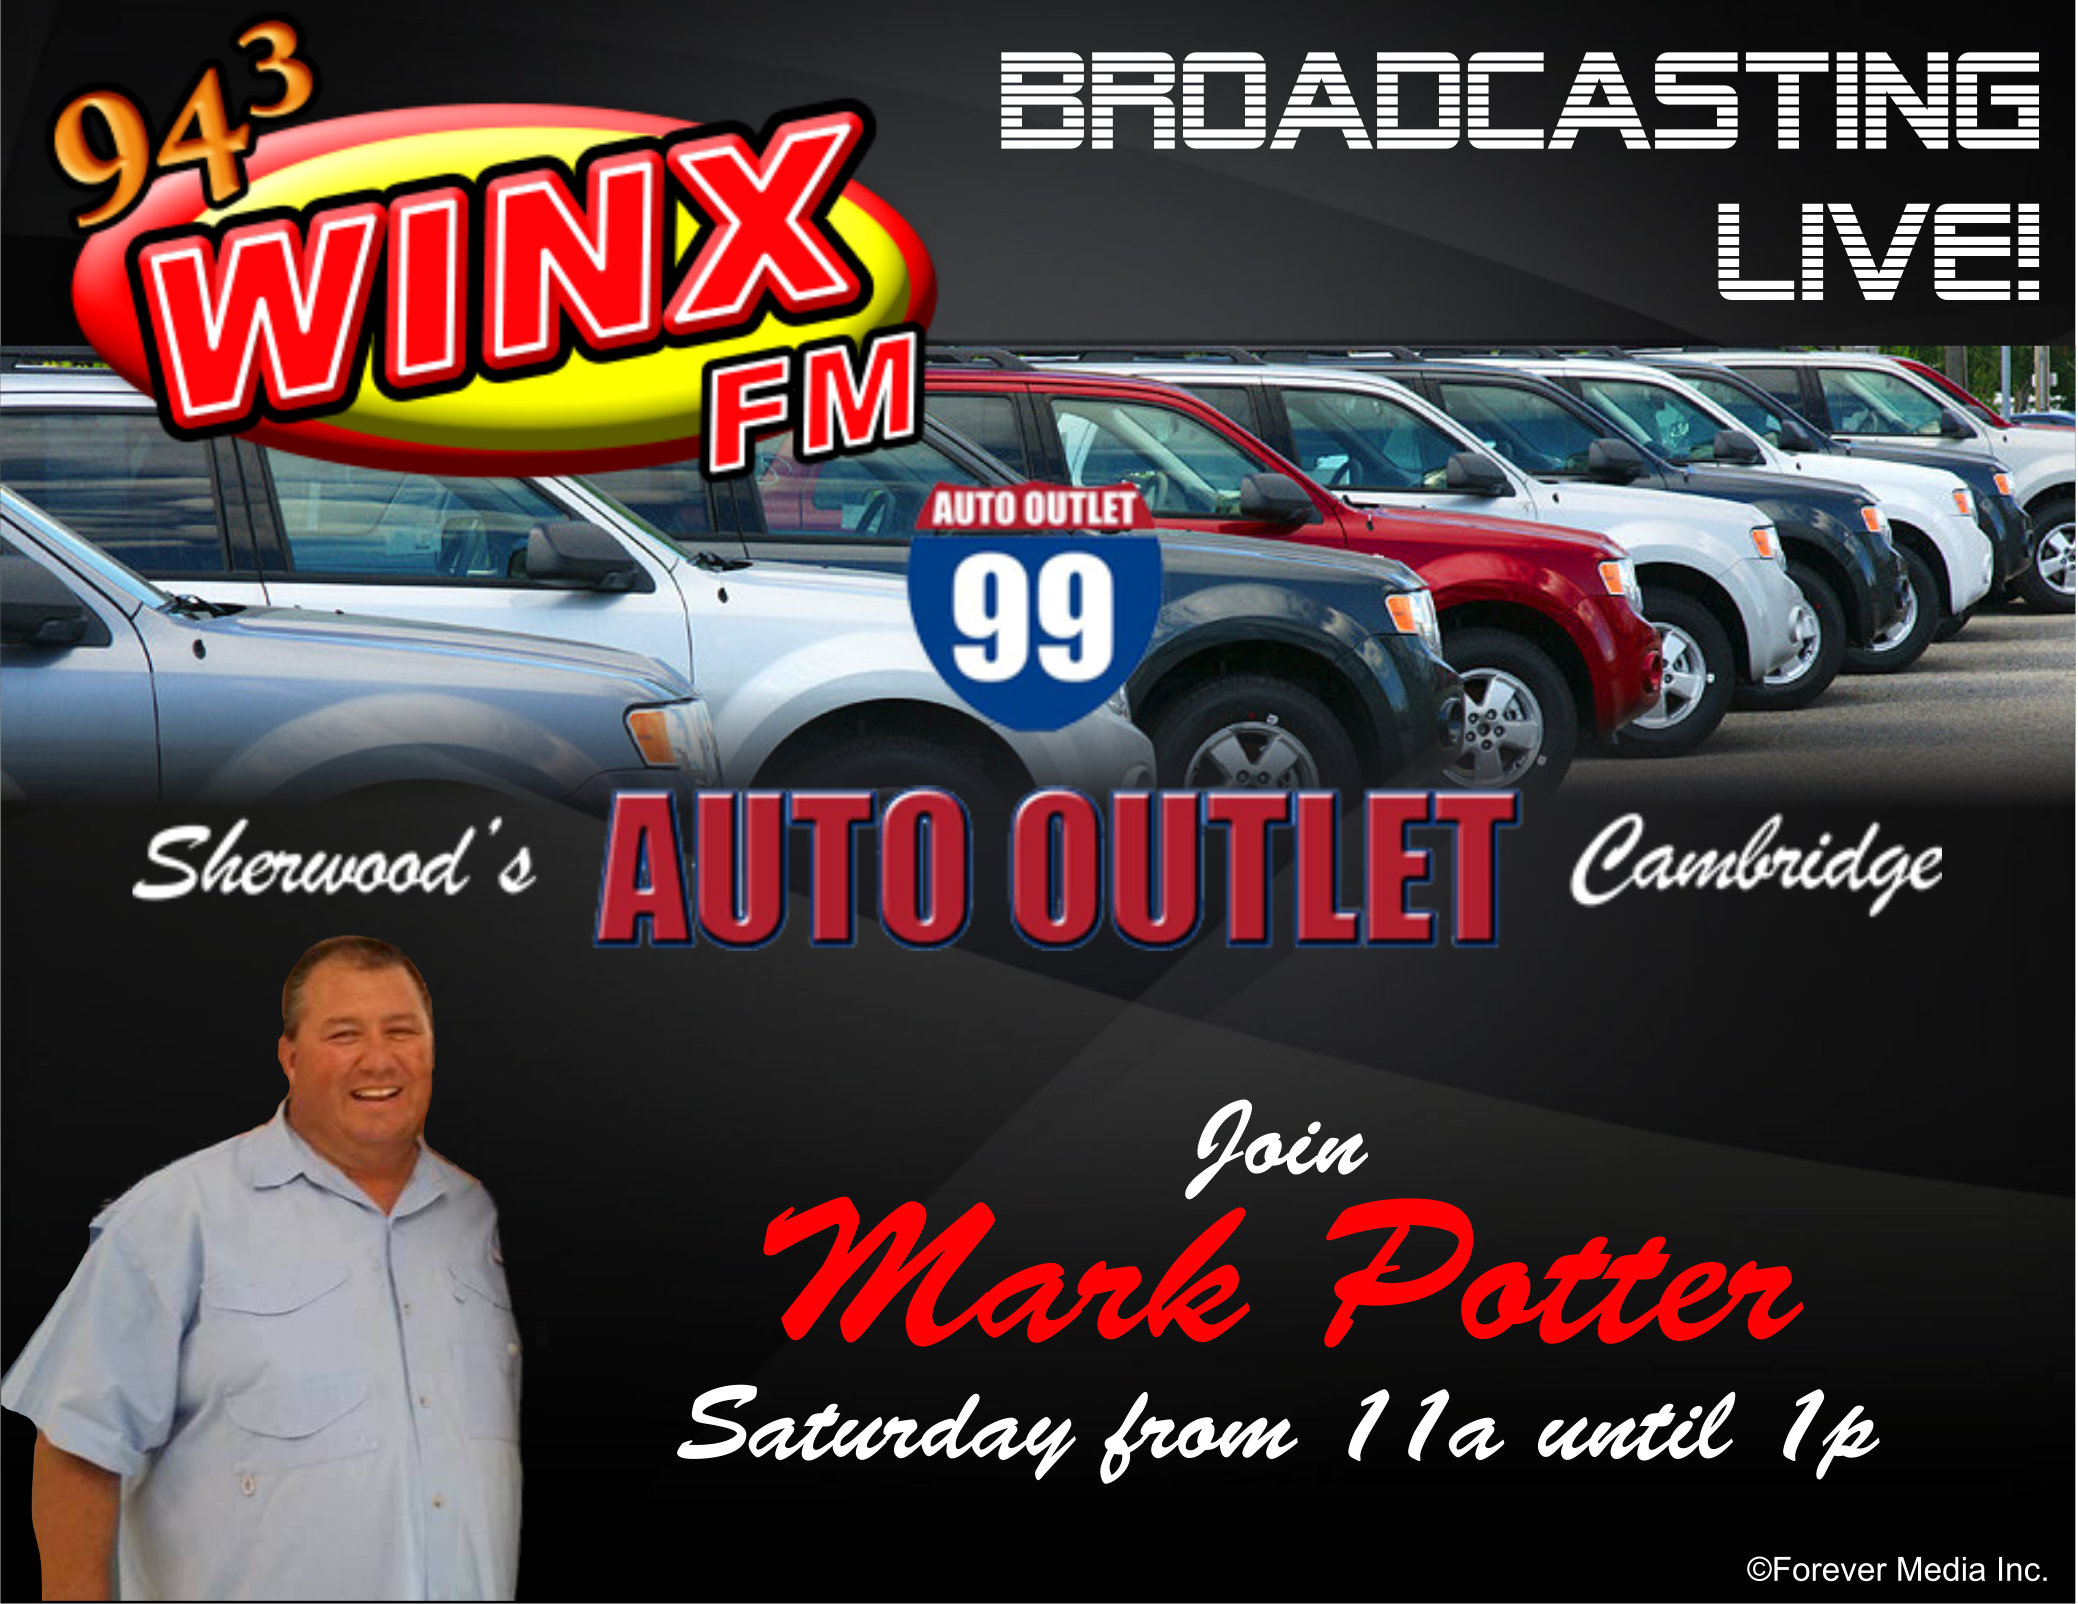 WINX & Mark Potter LIVE